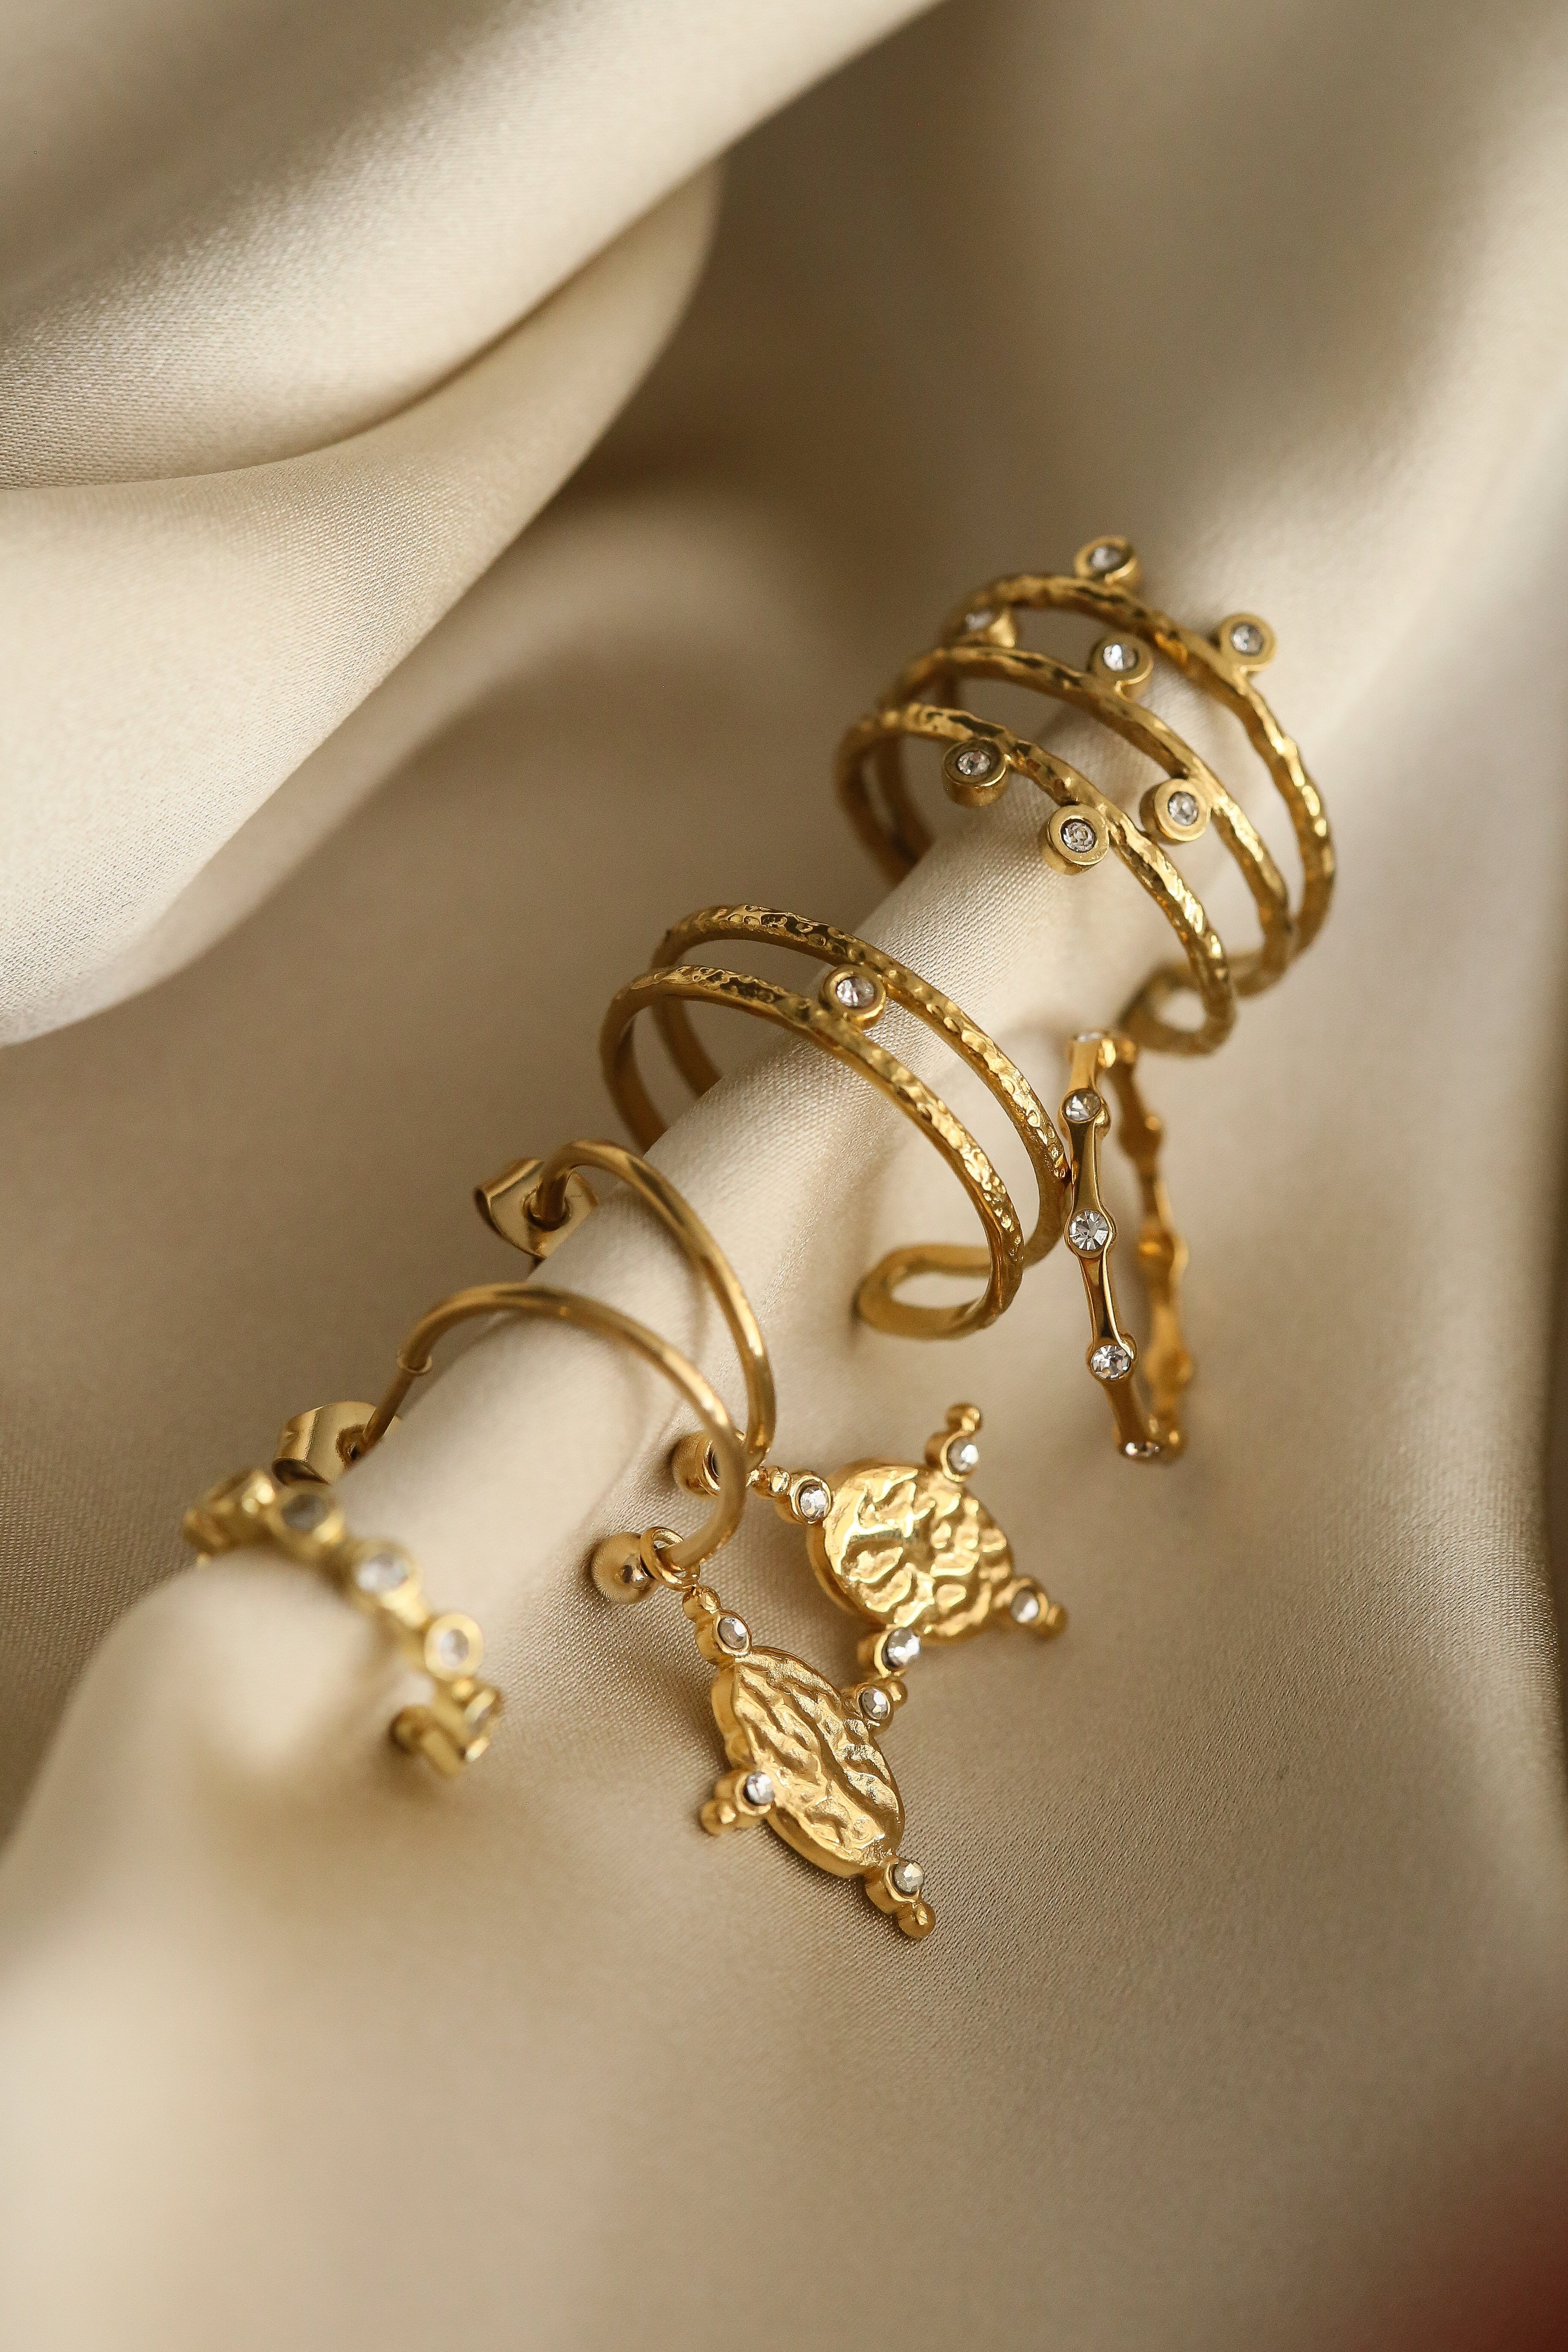 Hazel Earrings - Boutique Minimaliste has waterproof, durable, elegant and vintage inspired jewelry